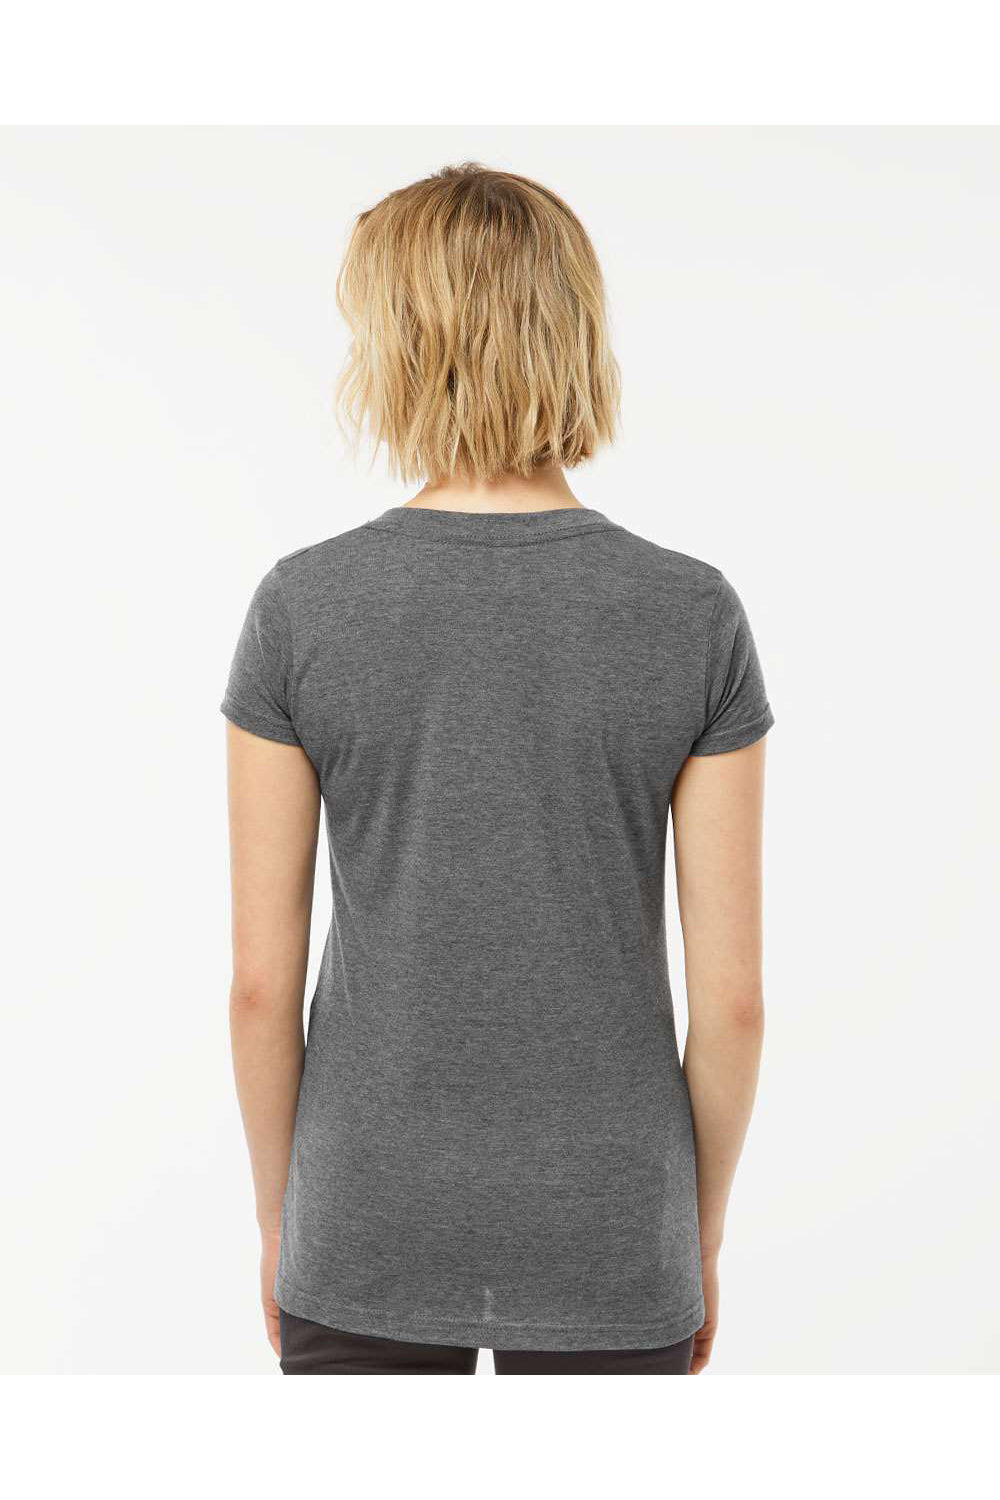 Tultex 244 Womens Poly-Rich Short Sleeve V-Neck T-Shirt Heather Charcoal Grey Model Back